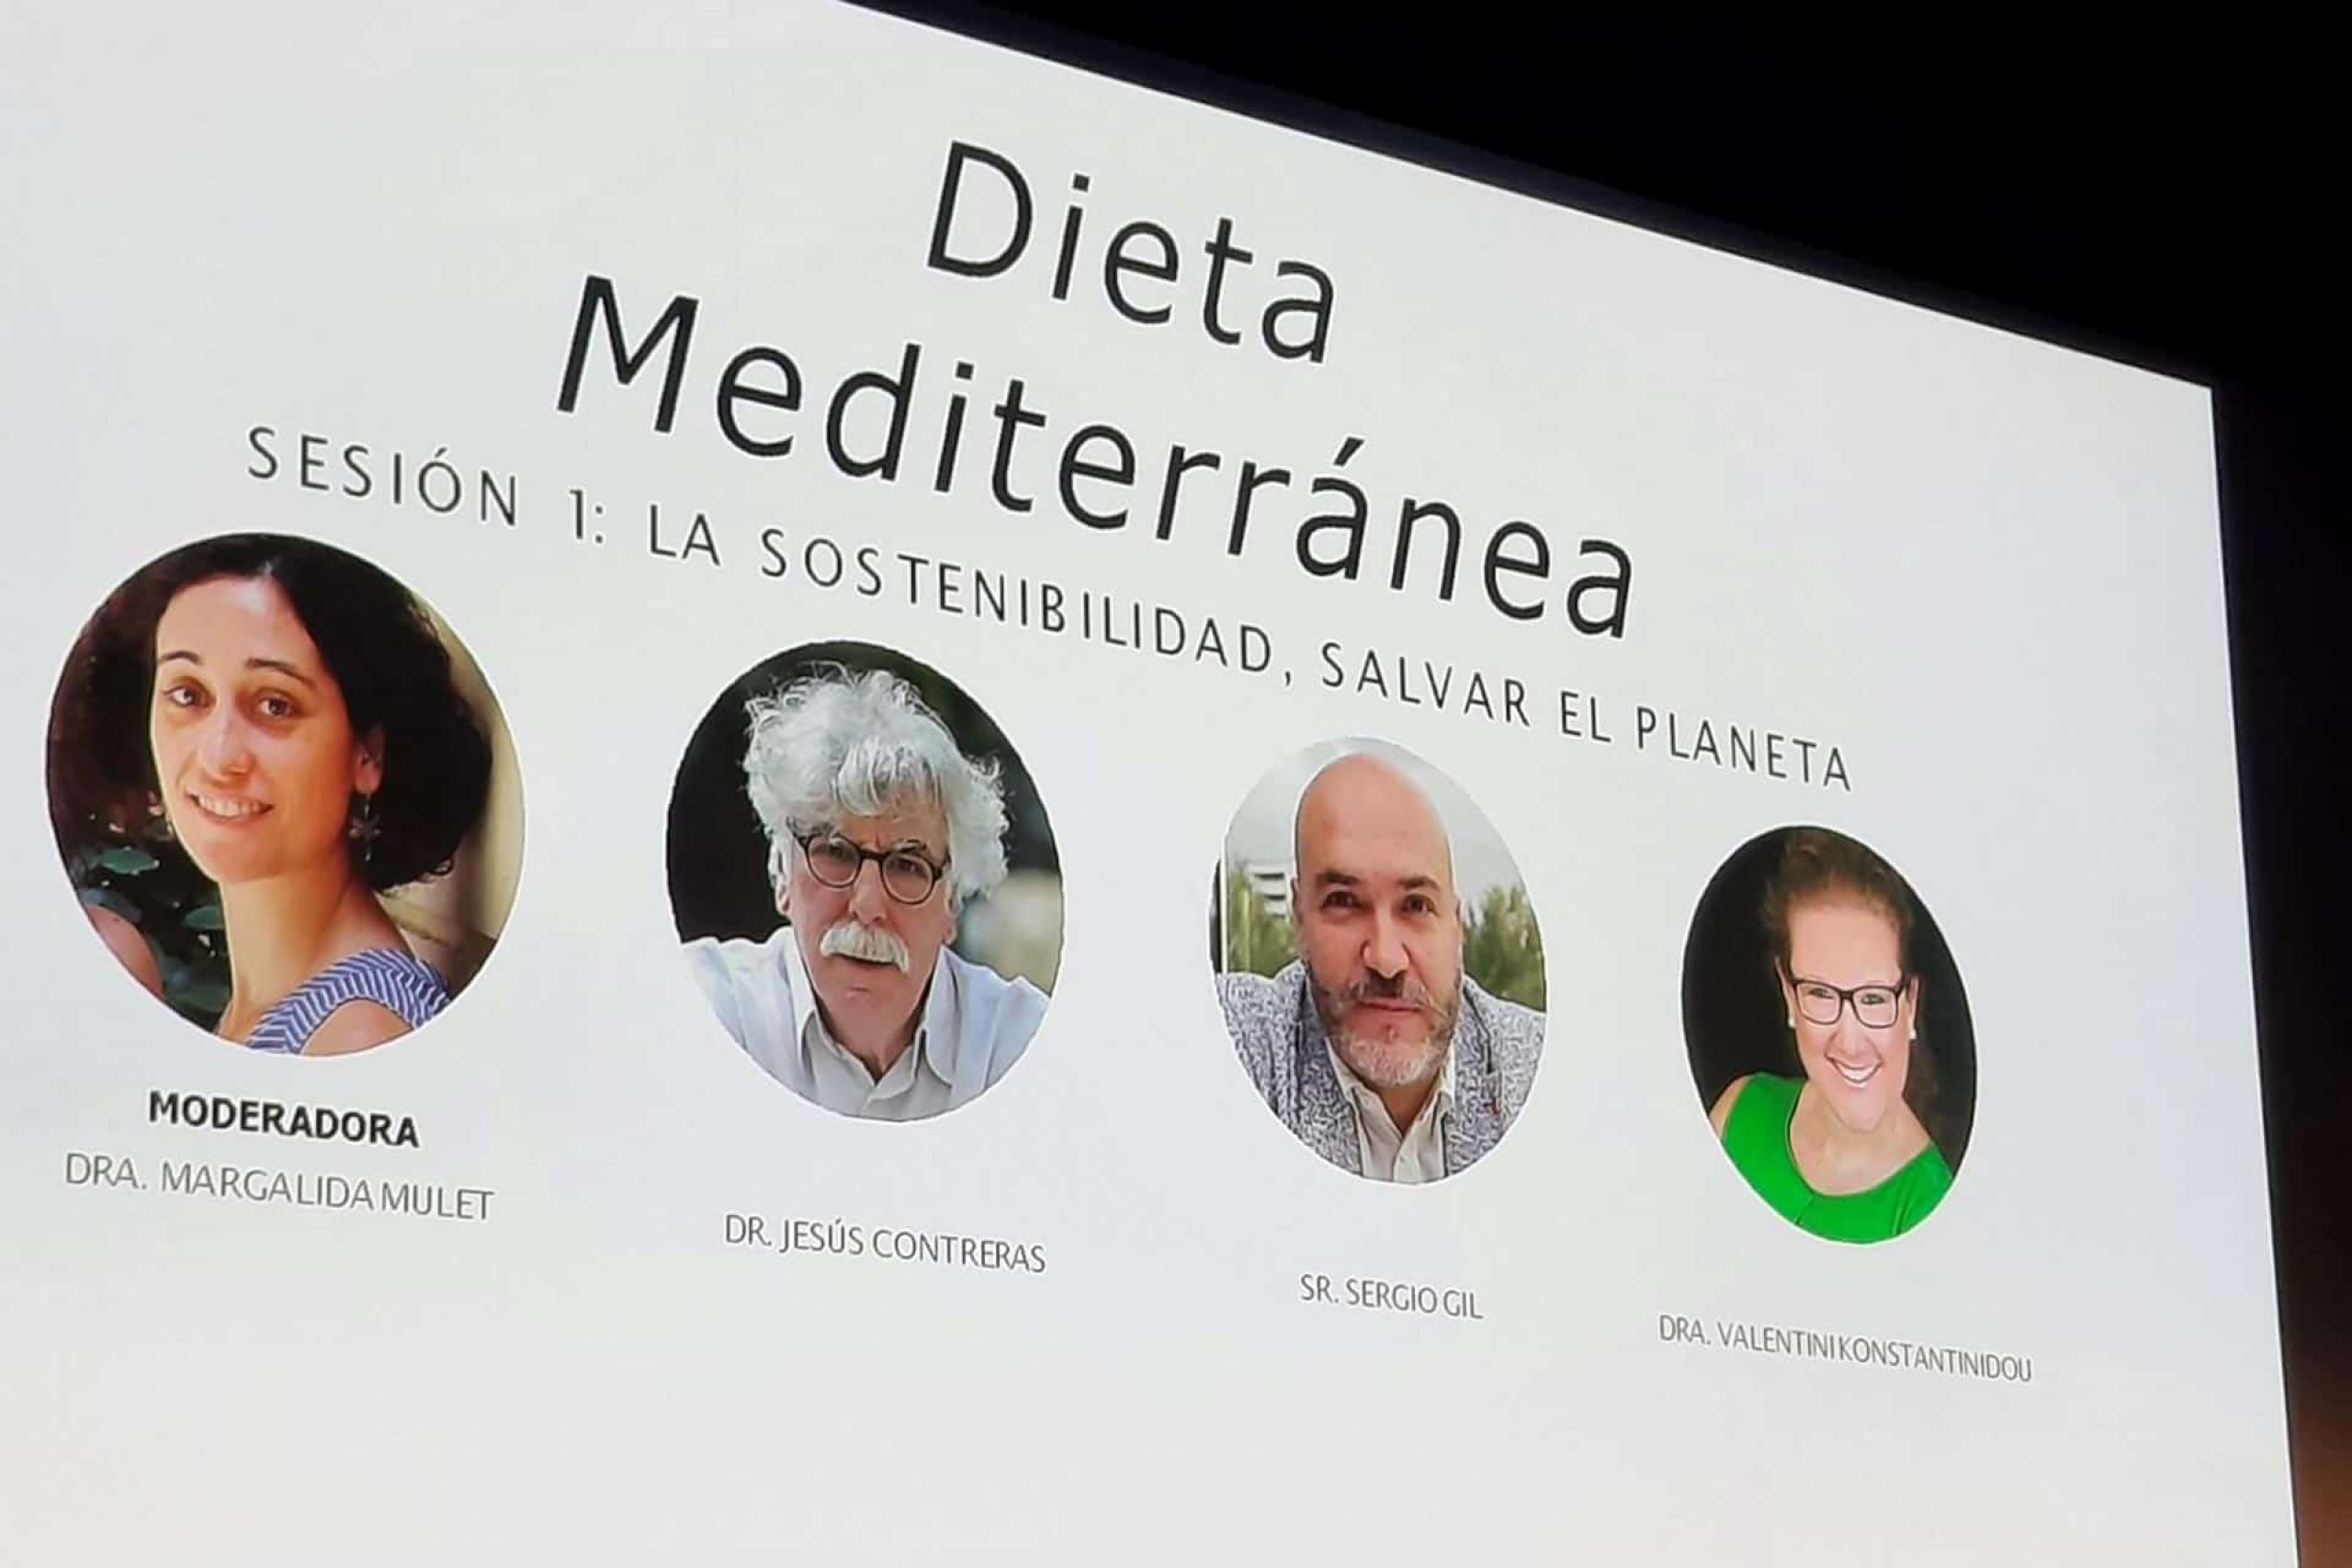 DNANUTRICOACH at the XIII International Mediterranean diet Congress